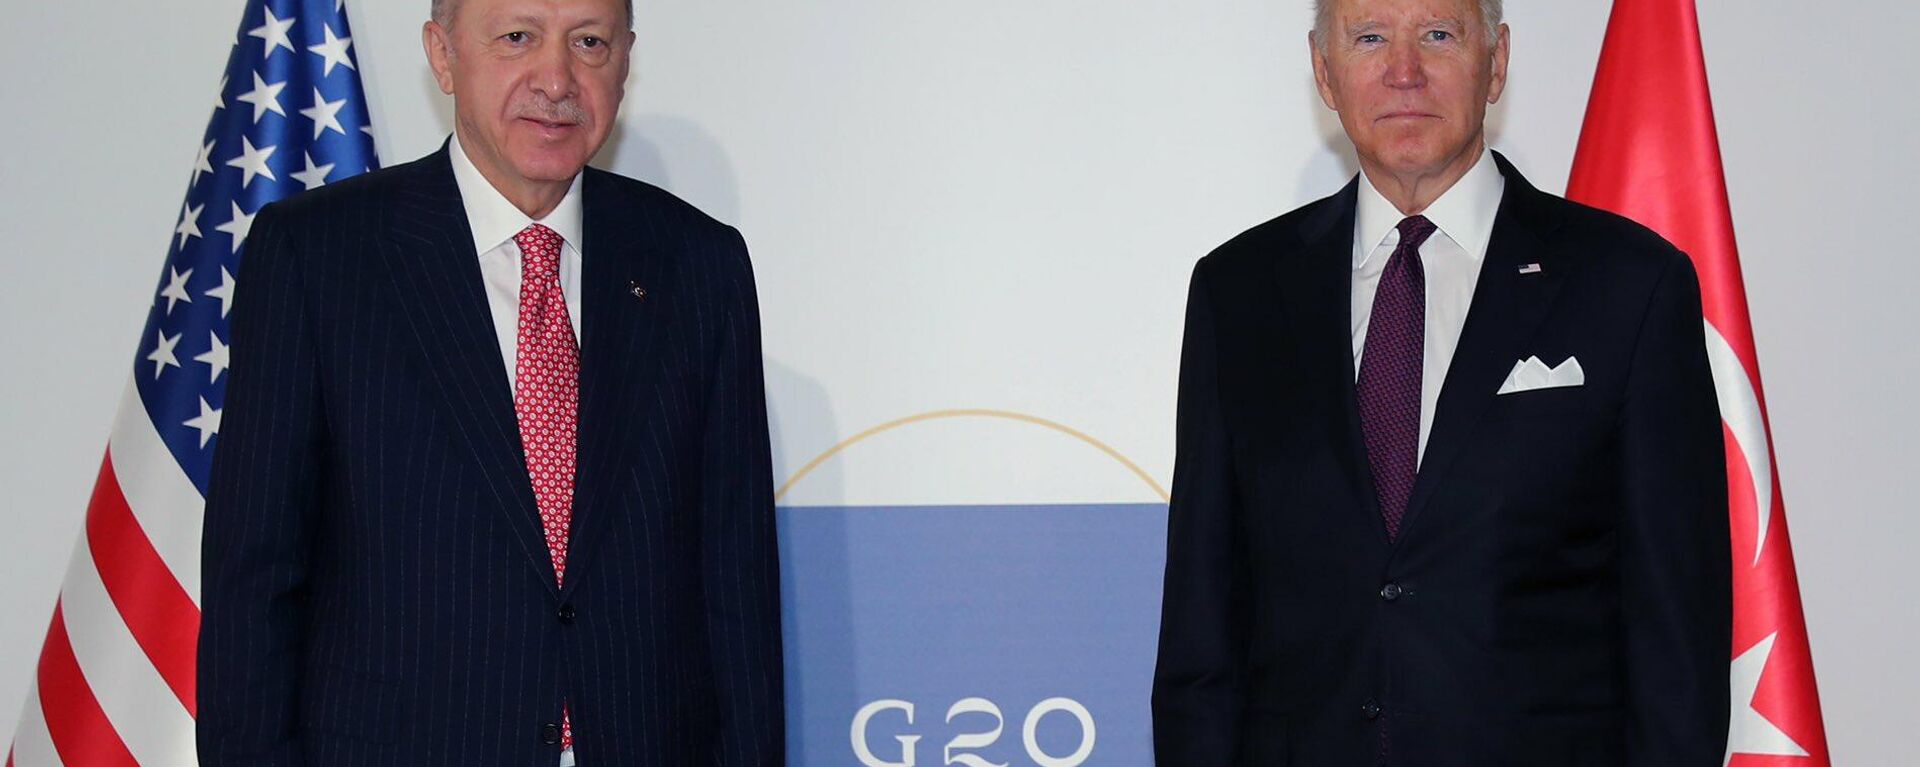 Turkish President Recep Tayyip Erdogan and US President Joe Biden meet on the sidelines of the G20 Summit in Rome, Saturday 31 October, 2021. - Sputnik International, 1920, 31.10.2021